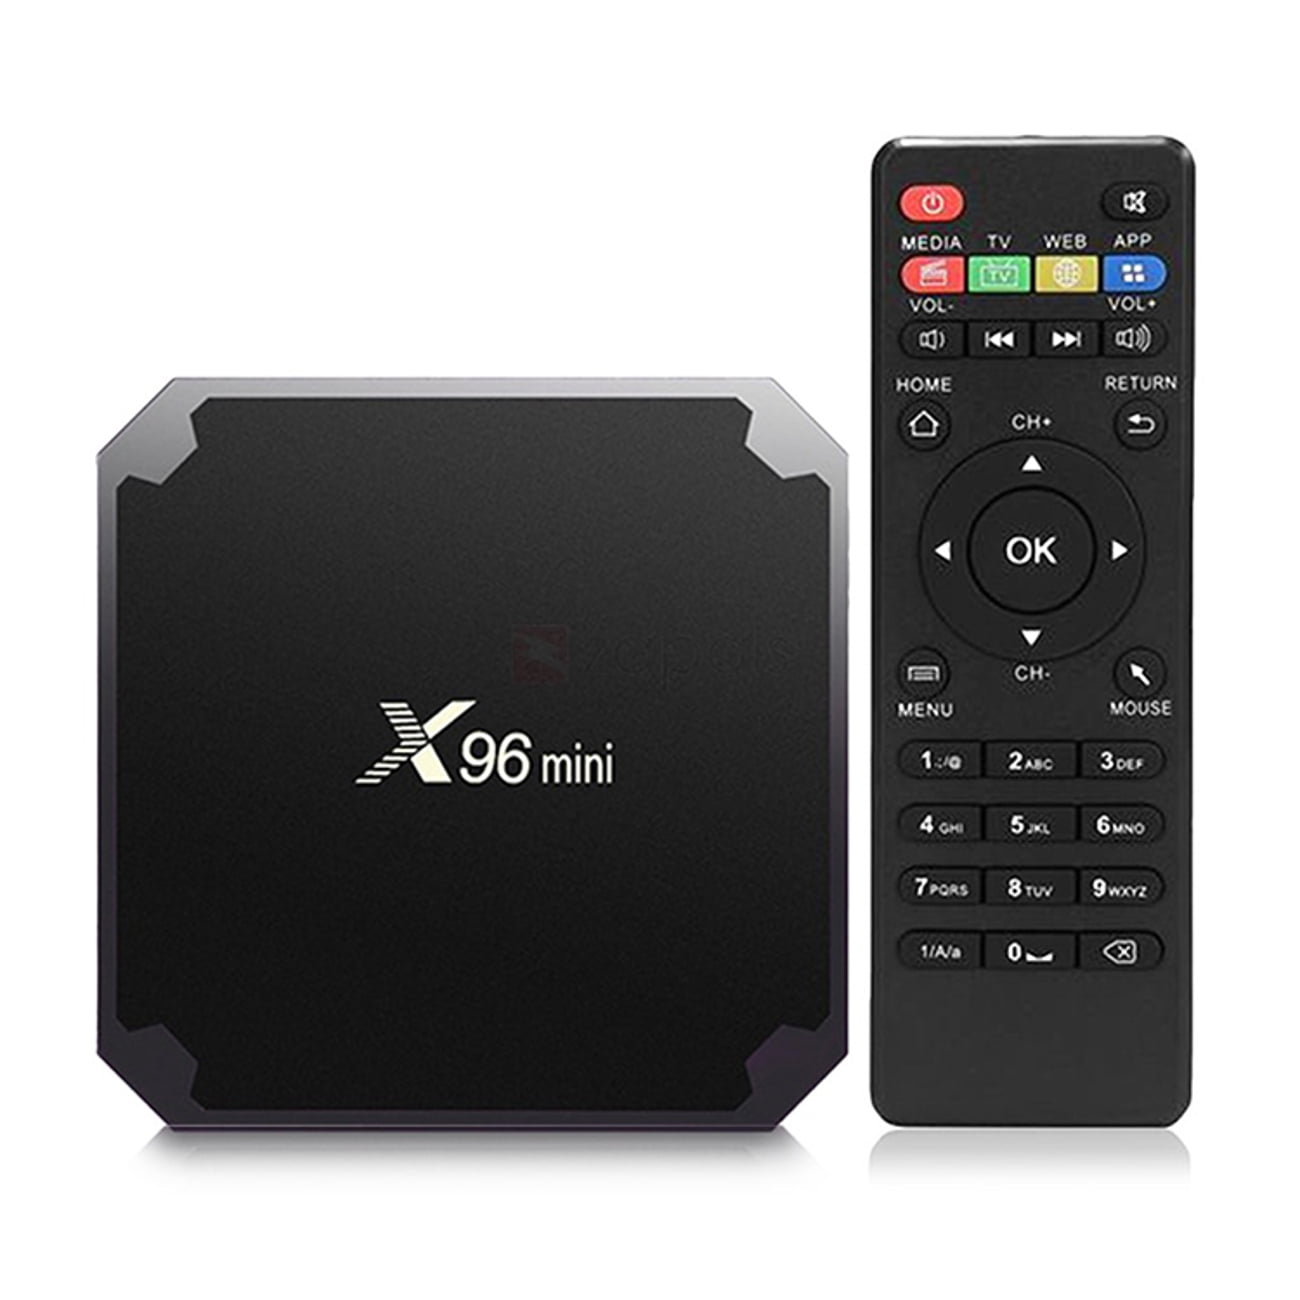 Vente Smart TV Box IPTV X96 Mini - الجزائر الجزائر